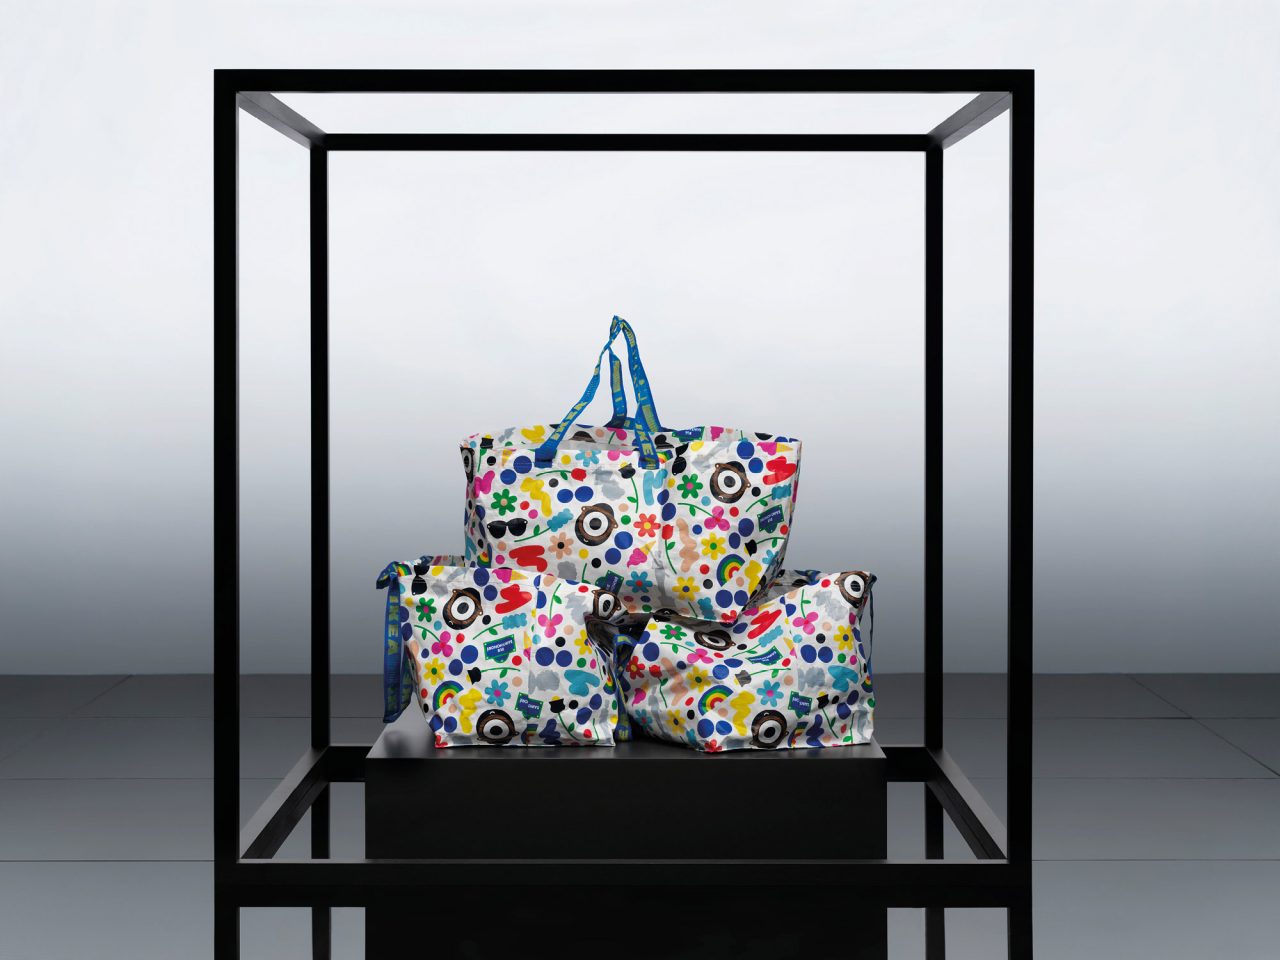 Ikea launches beach version of the popular Frakta bag - Domus